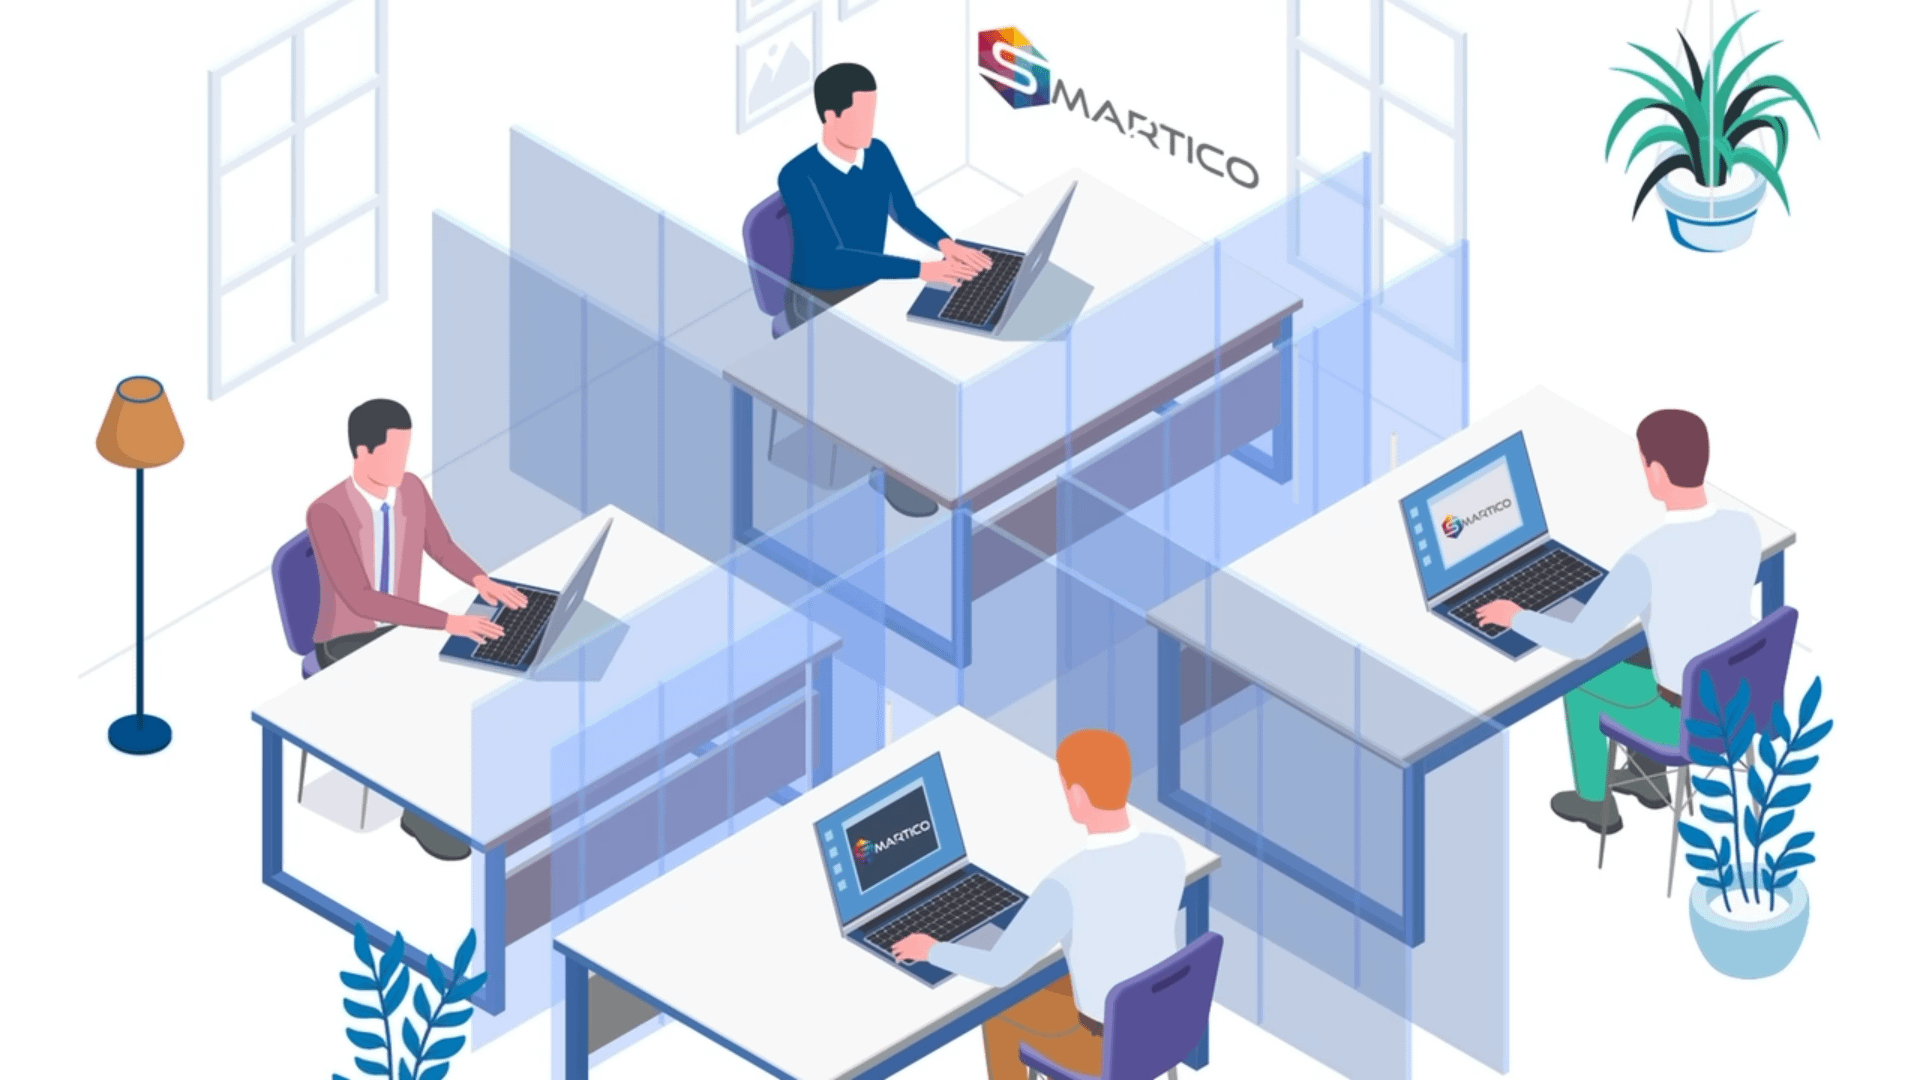 Smartico 1 - Portfolio